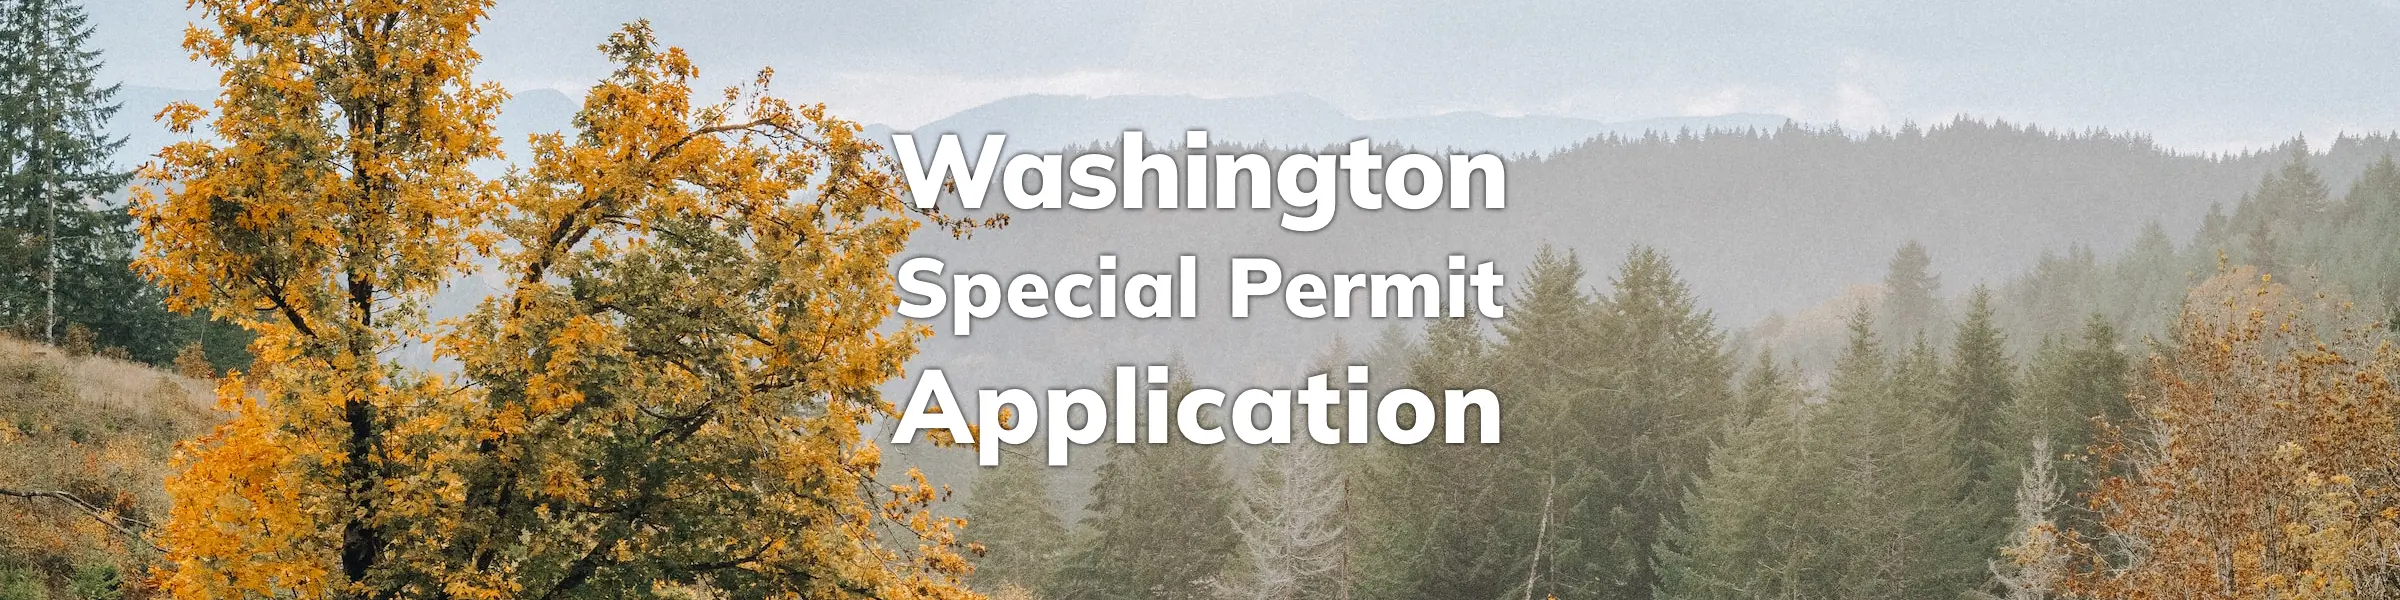 Washington Special Permit Application